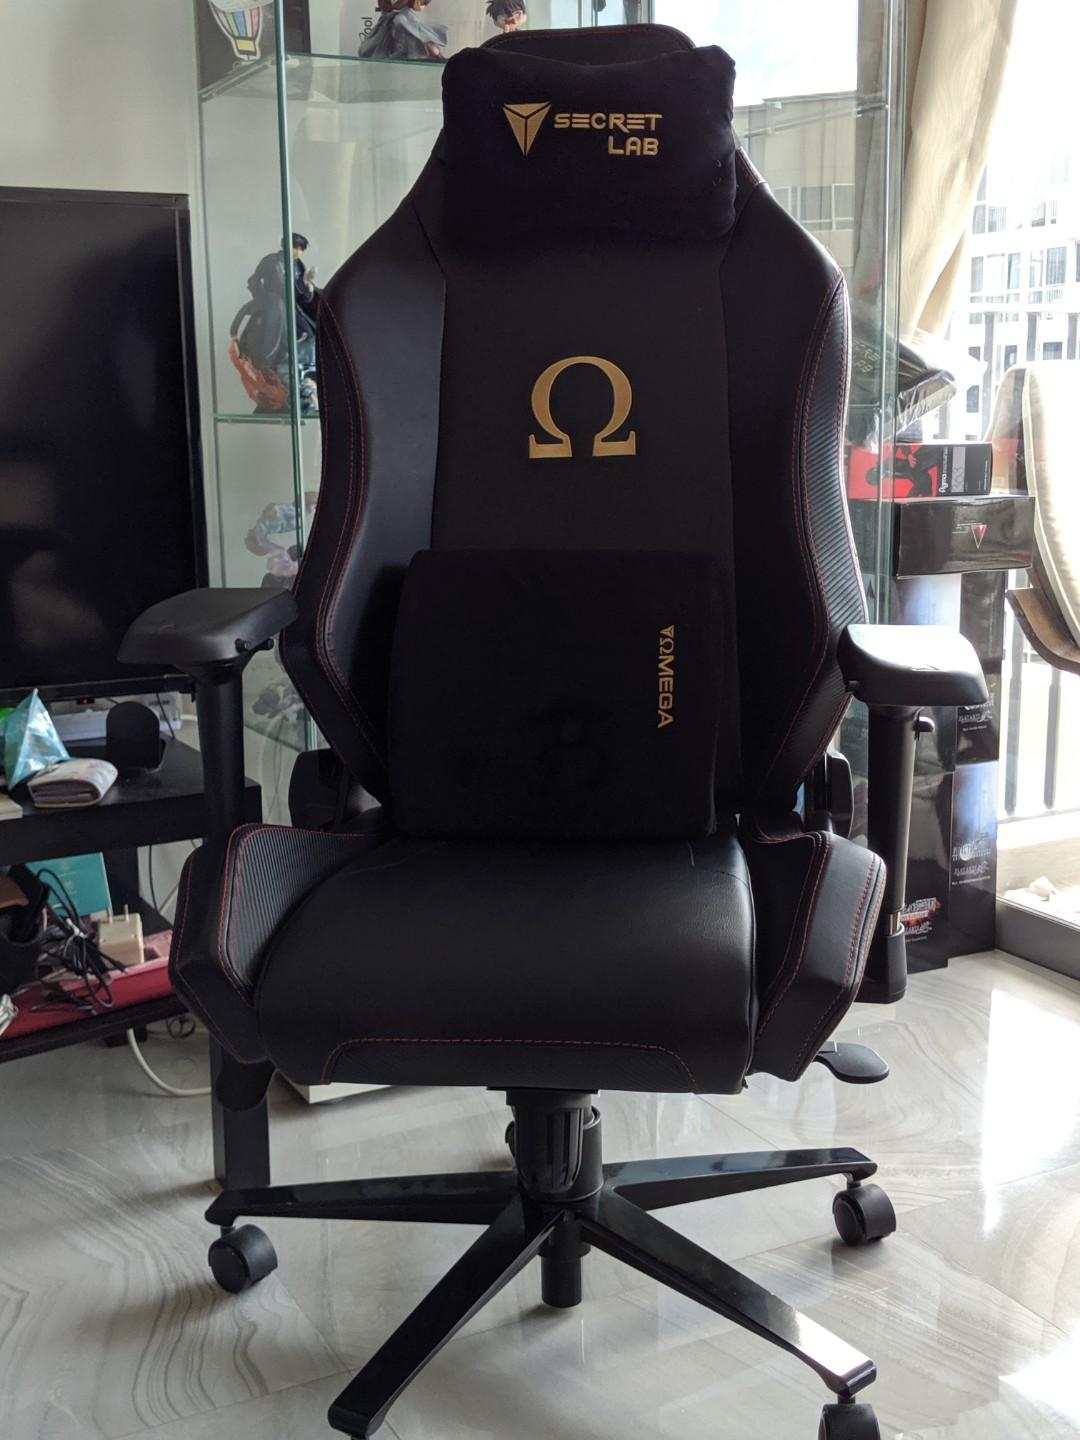 Secret Lab Omega Gaming Chair, Furniture & Home Living, Furniture ...